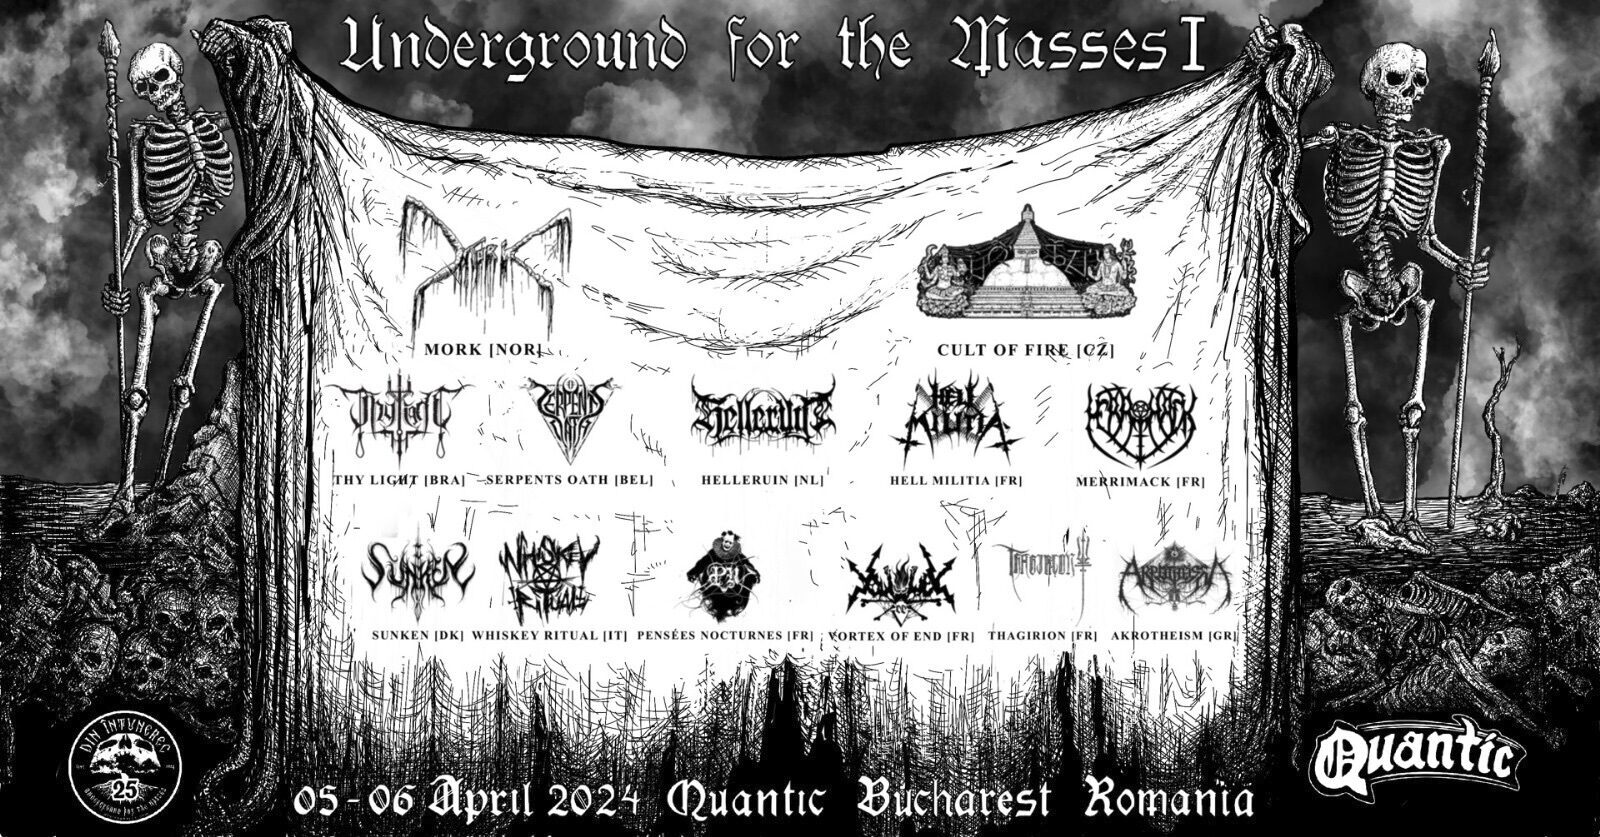 Cronică Underground for the Masses I, 5-6 aprilie în club Quantic